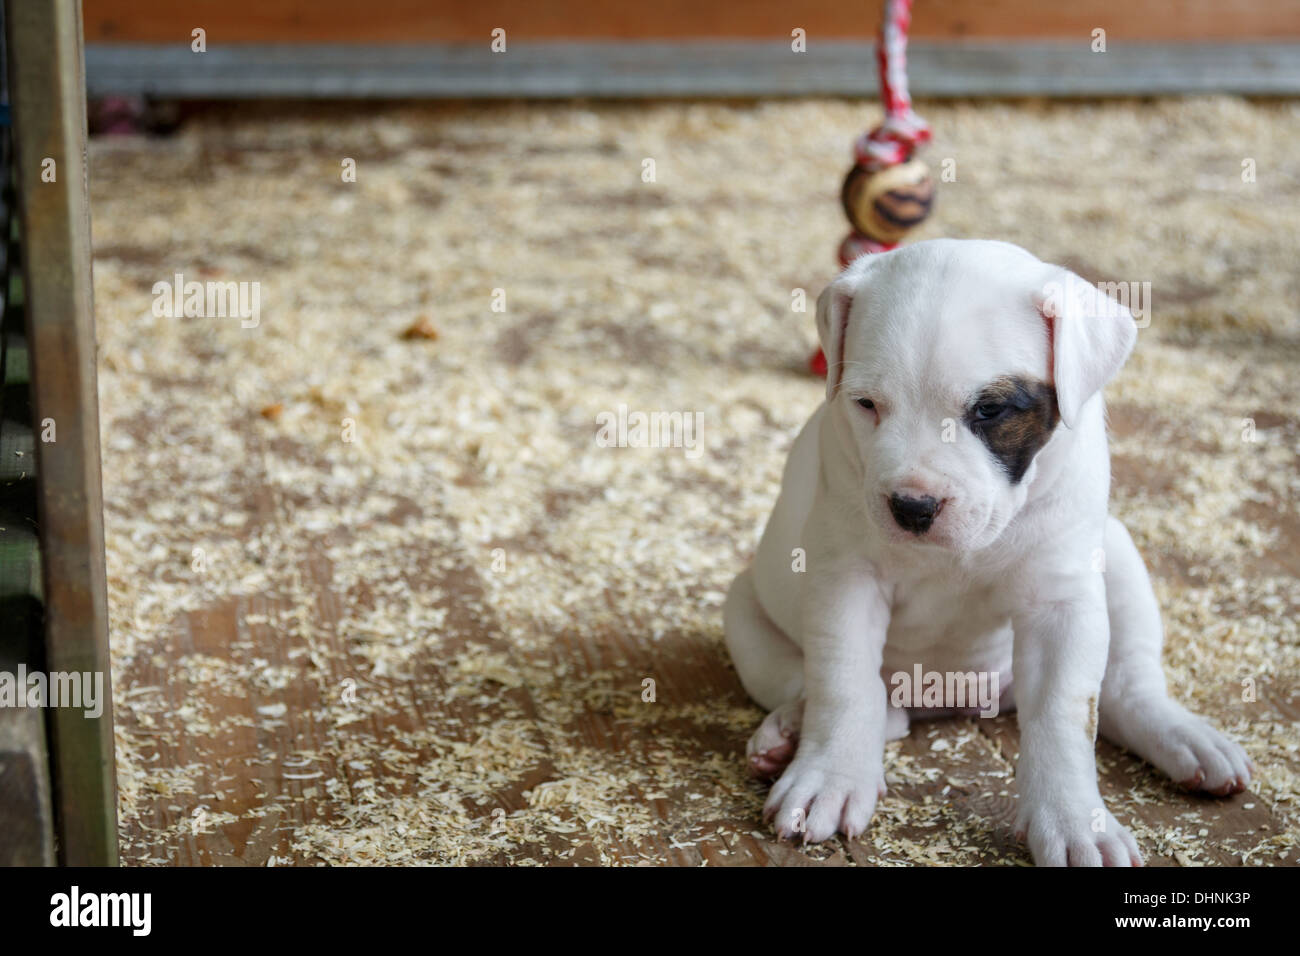 Lonely puppy Stock Photo - Alamy